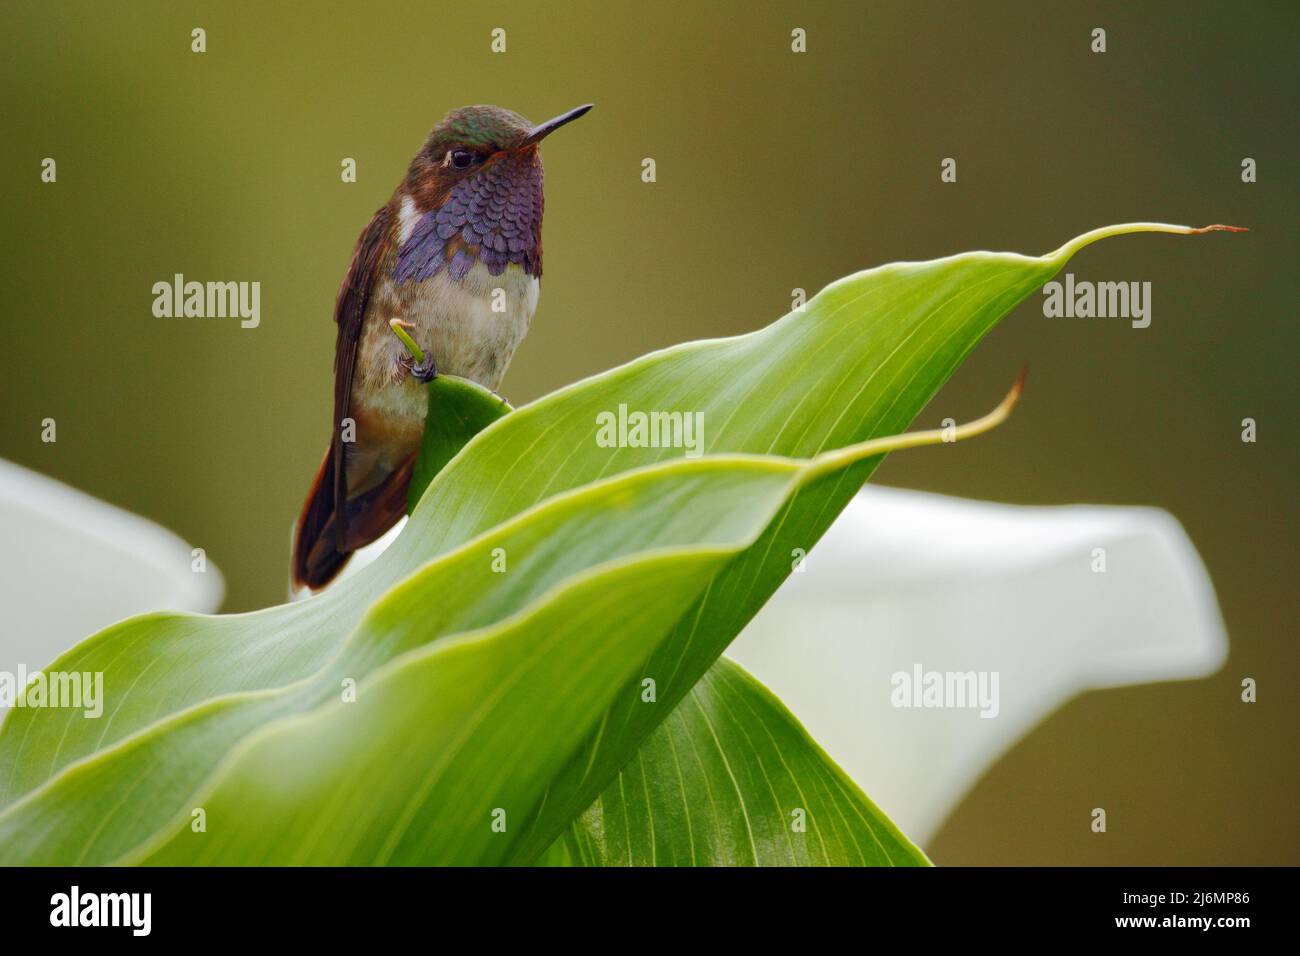 Volcano Hummingbird, Selasphorus flammula, small bird in the green leaves, animal in the nature habitat, mountain tropic forest, wildlife, Costa Rica Stock Photo